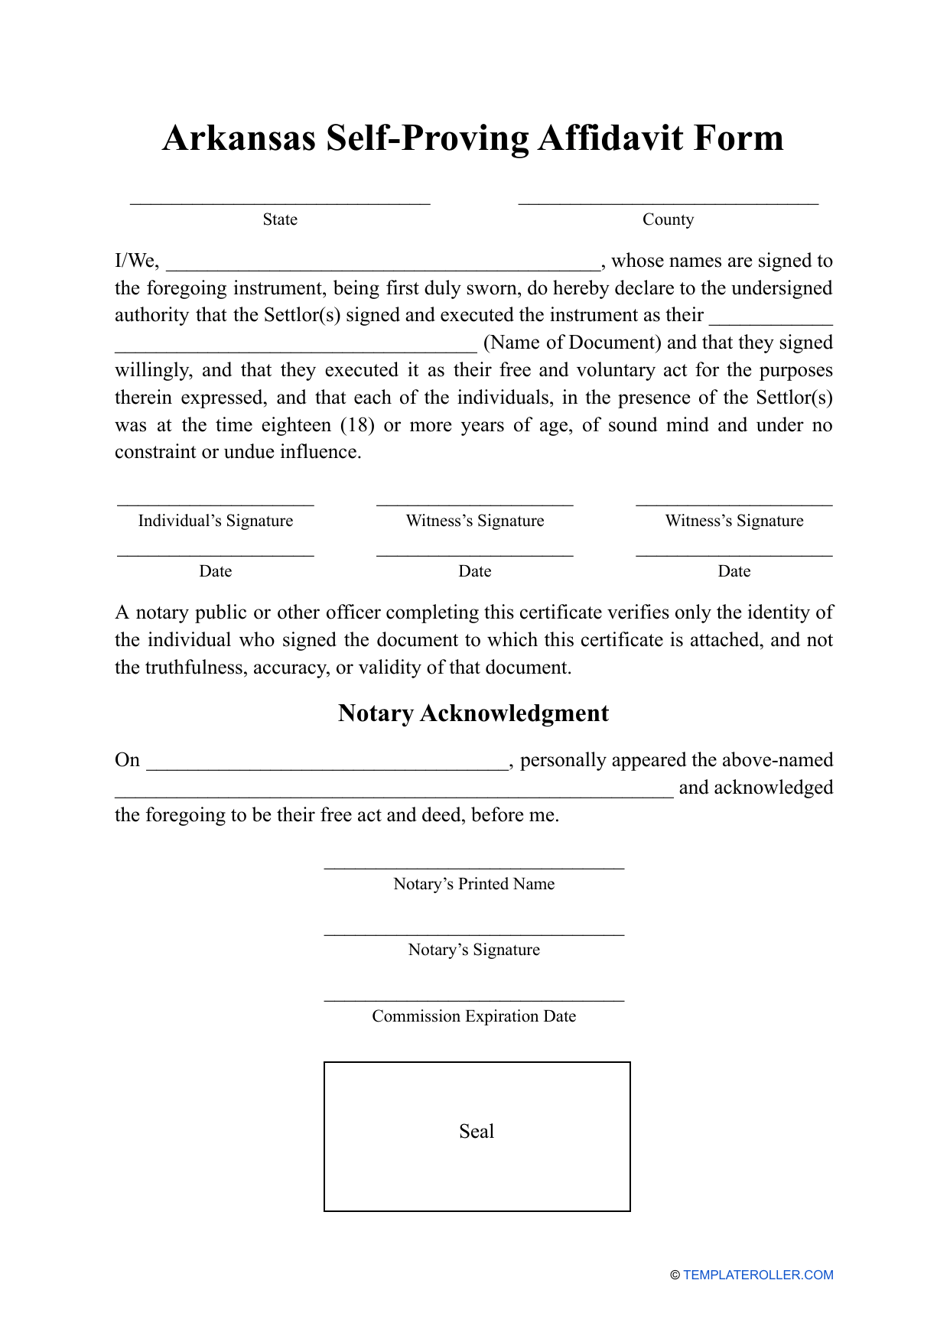 Self-proving Affidavit Form - Arkansas, Page 1